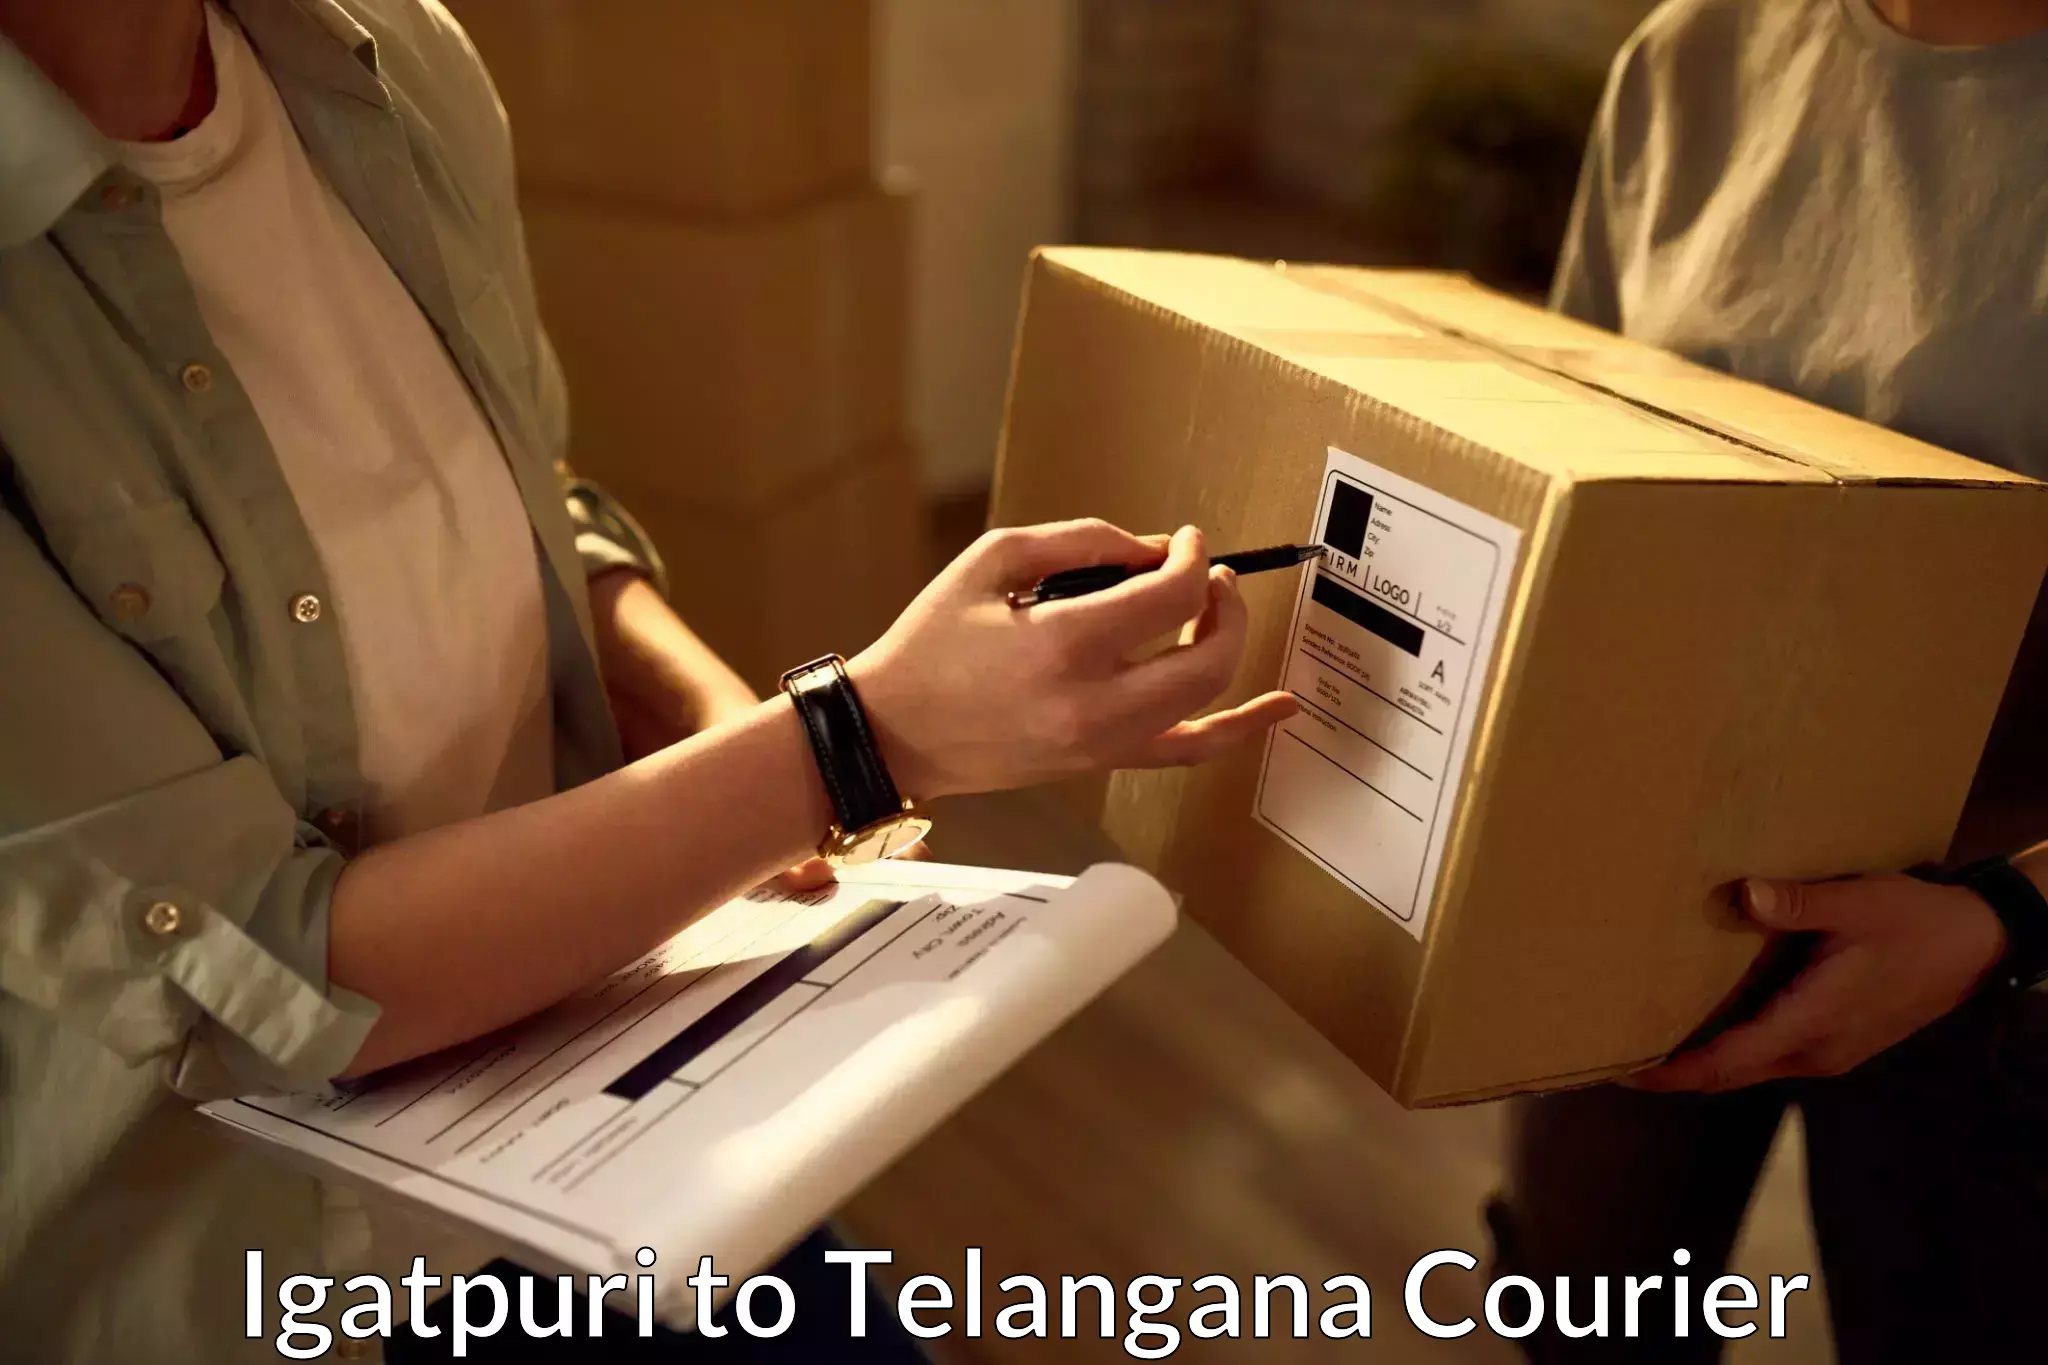 Urban courier service Igatpuri to Gangadhara